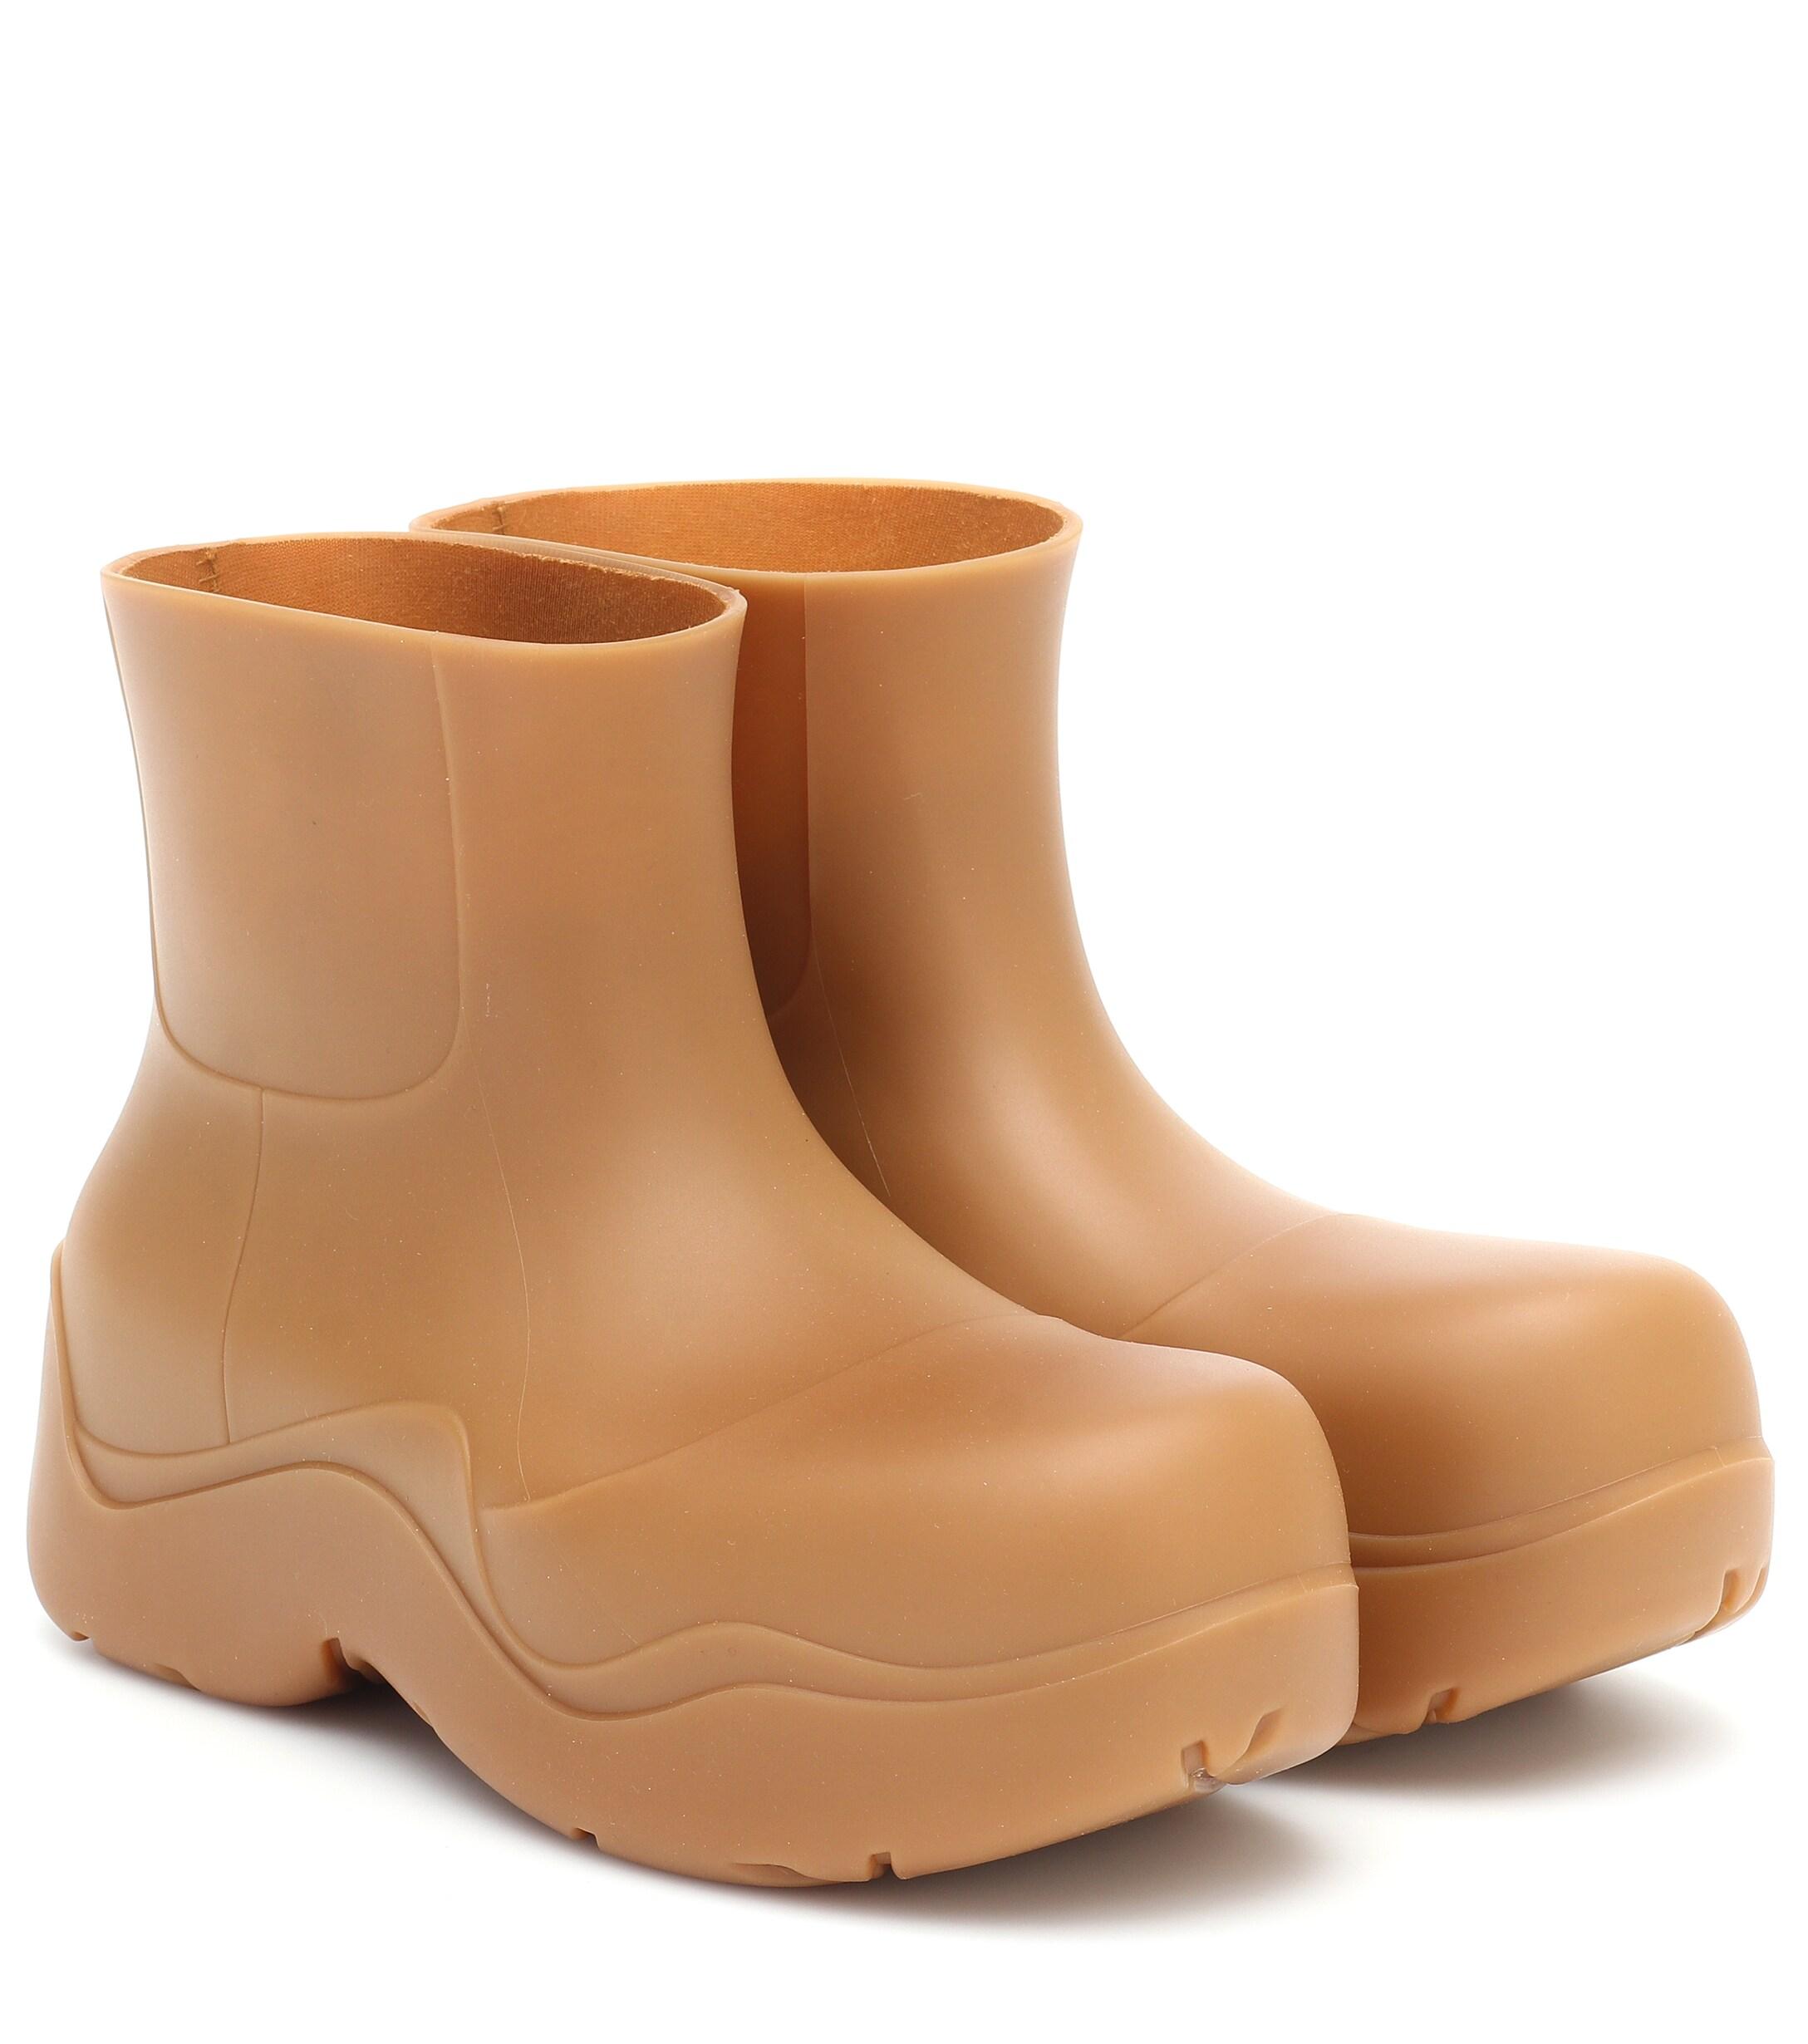 Bottega puddle boots review 